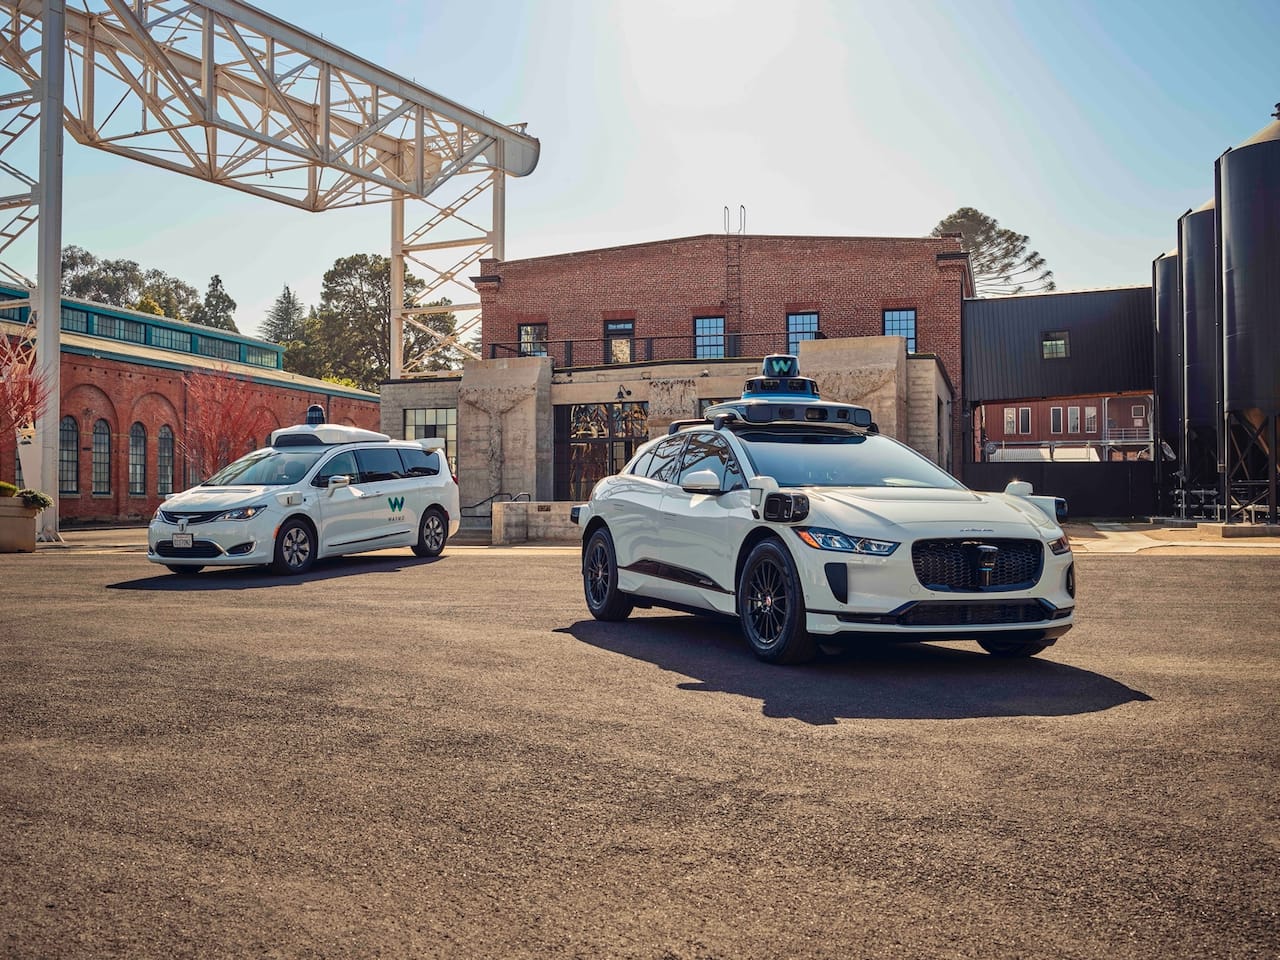 Waymo's autonomously driven Jaguar I-PACE electric SUV and legacy Chrysler Pacifica minivan.